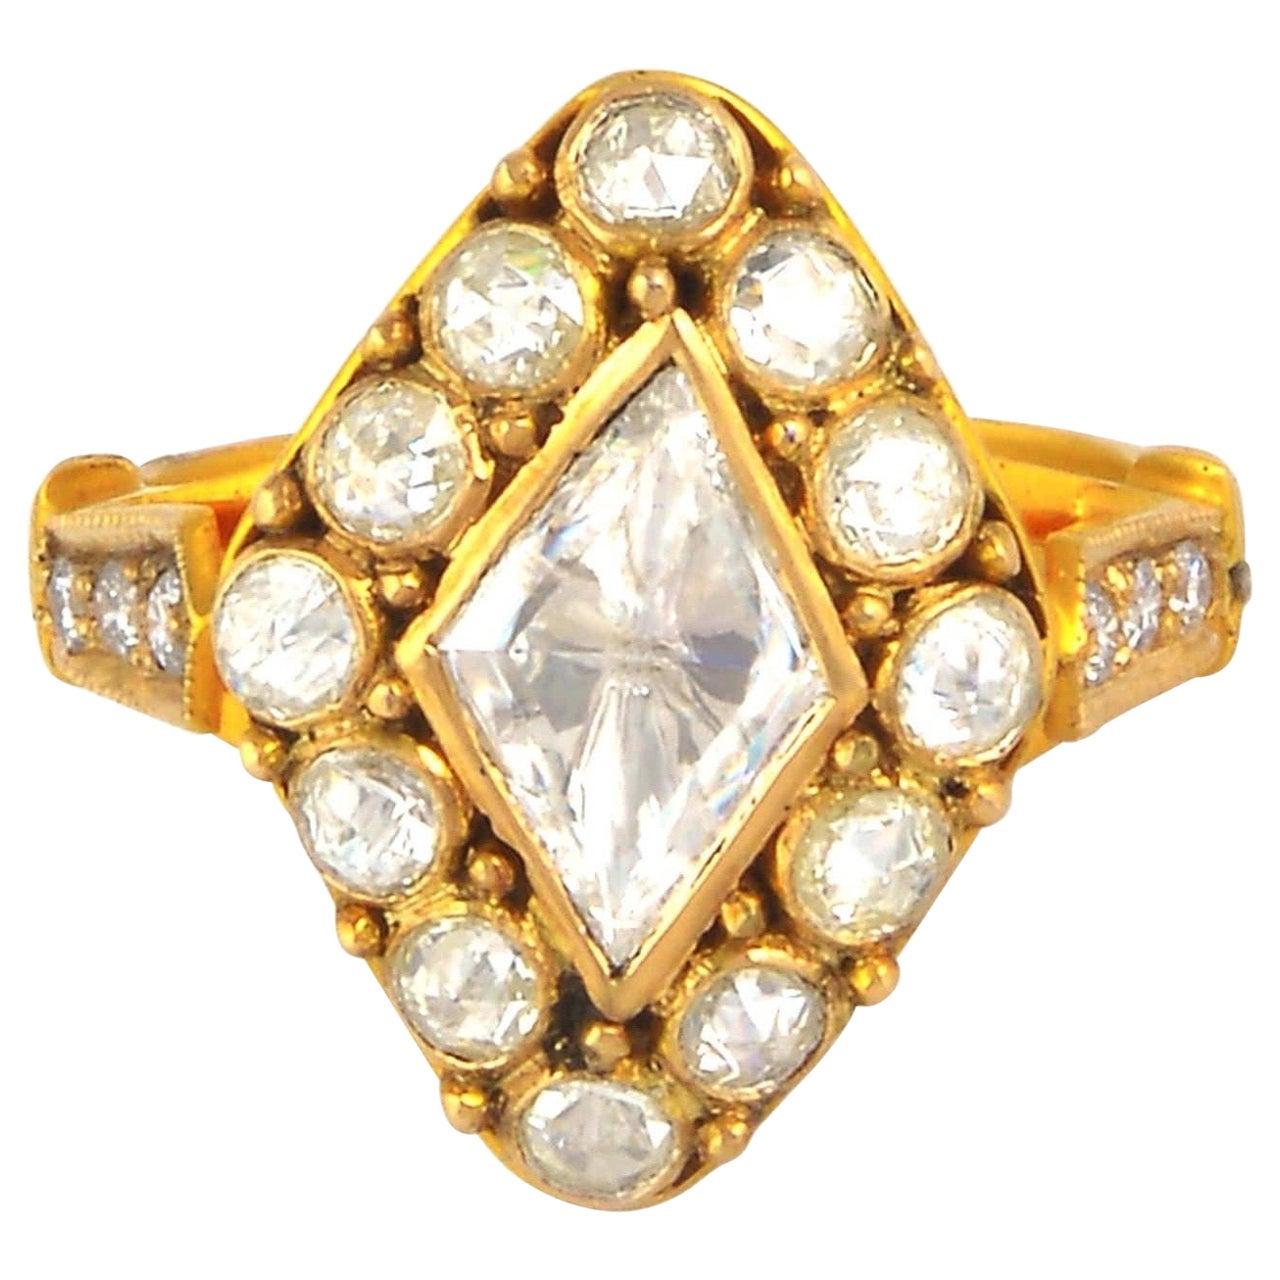 For Sale:  1.24 Carat Rose Cut Diamond Ring